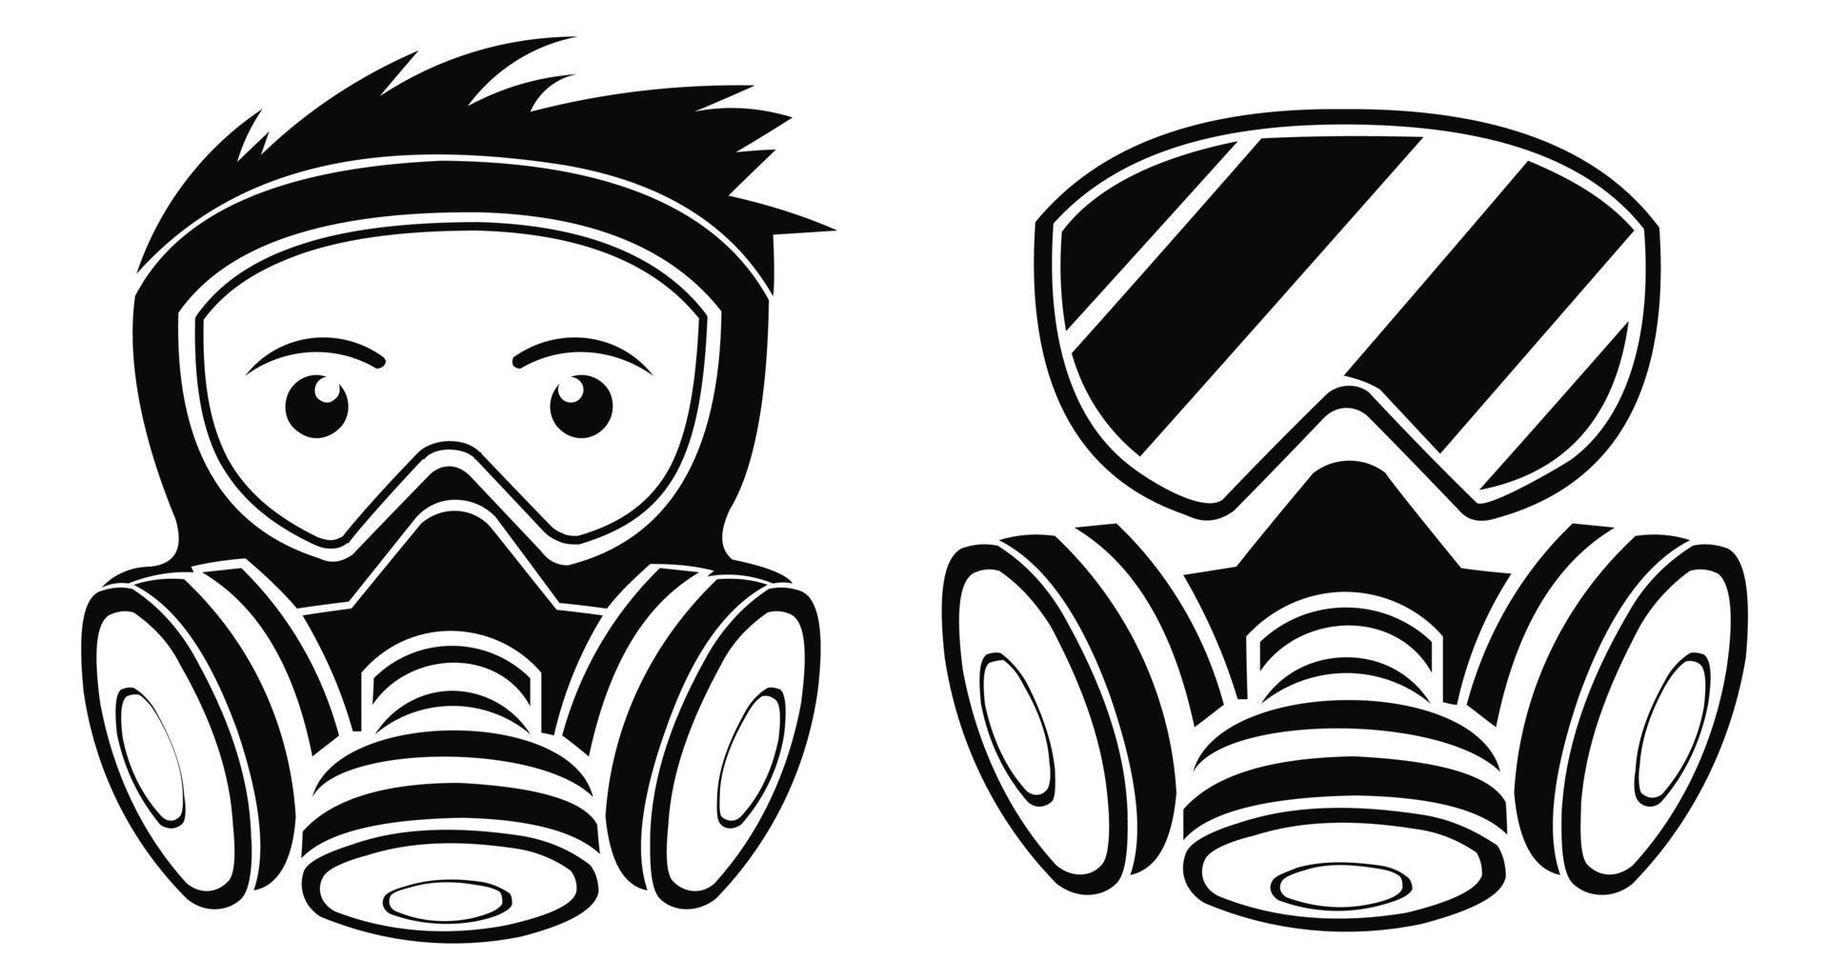 radioactiviteit met gasmasker, vervuiling en gevaar, gasmasker grunge. radioactief teken. radioactief gevaar. vector